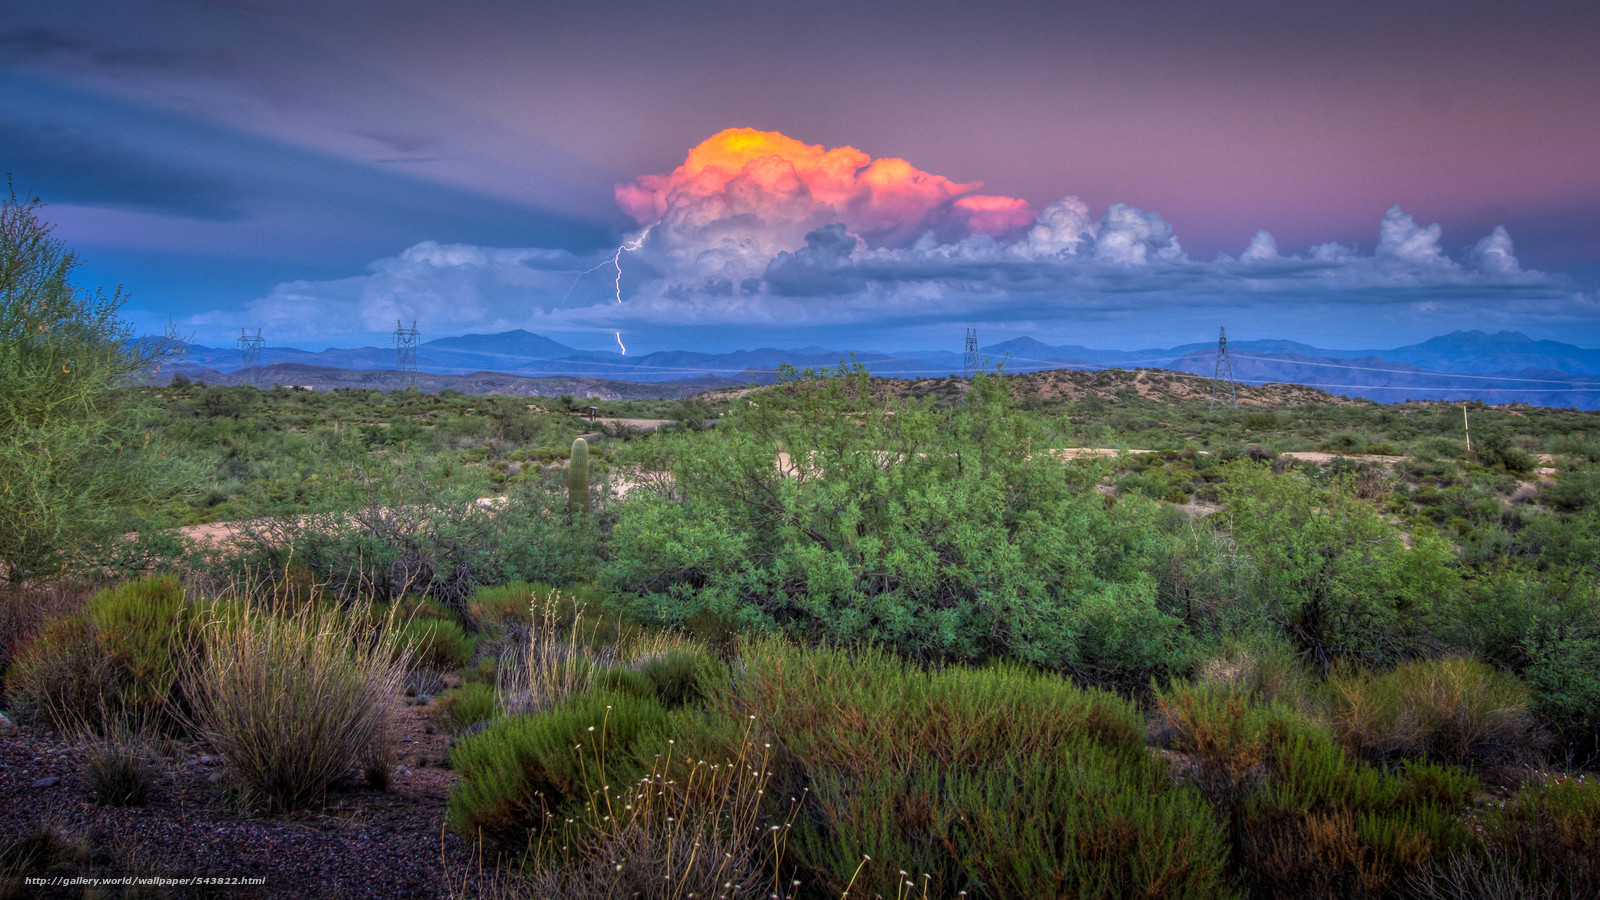 Download wallpaper strike thunderhead Scottsdale Arizona 1600x900